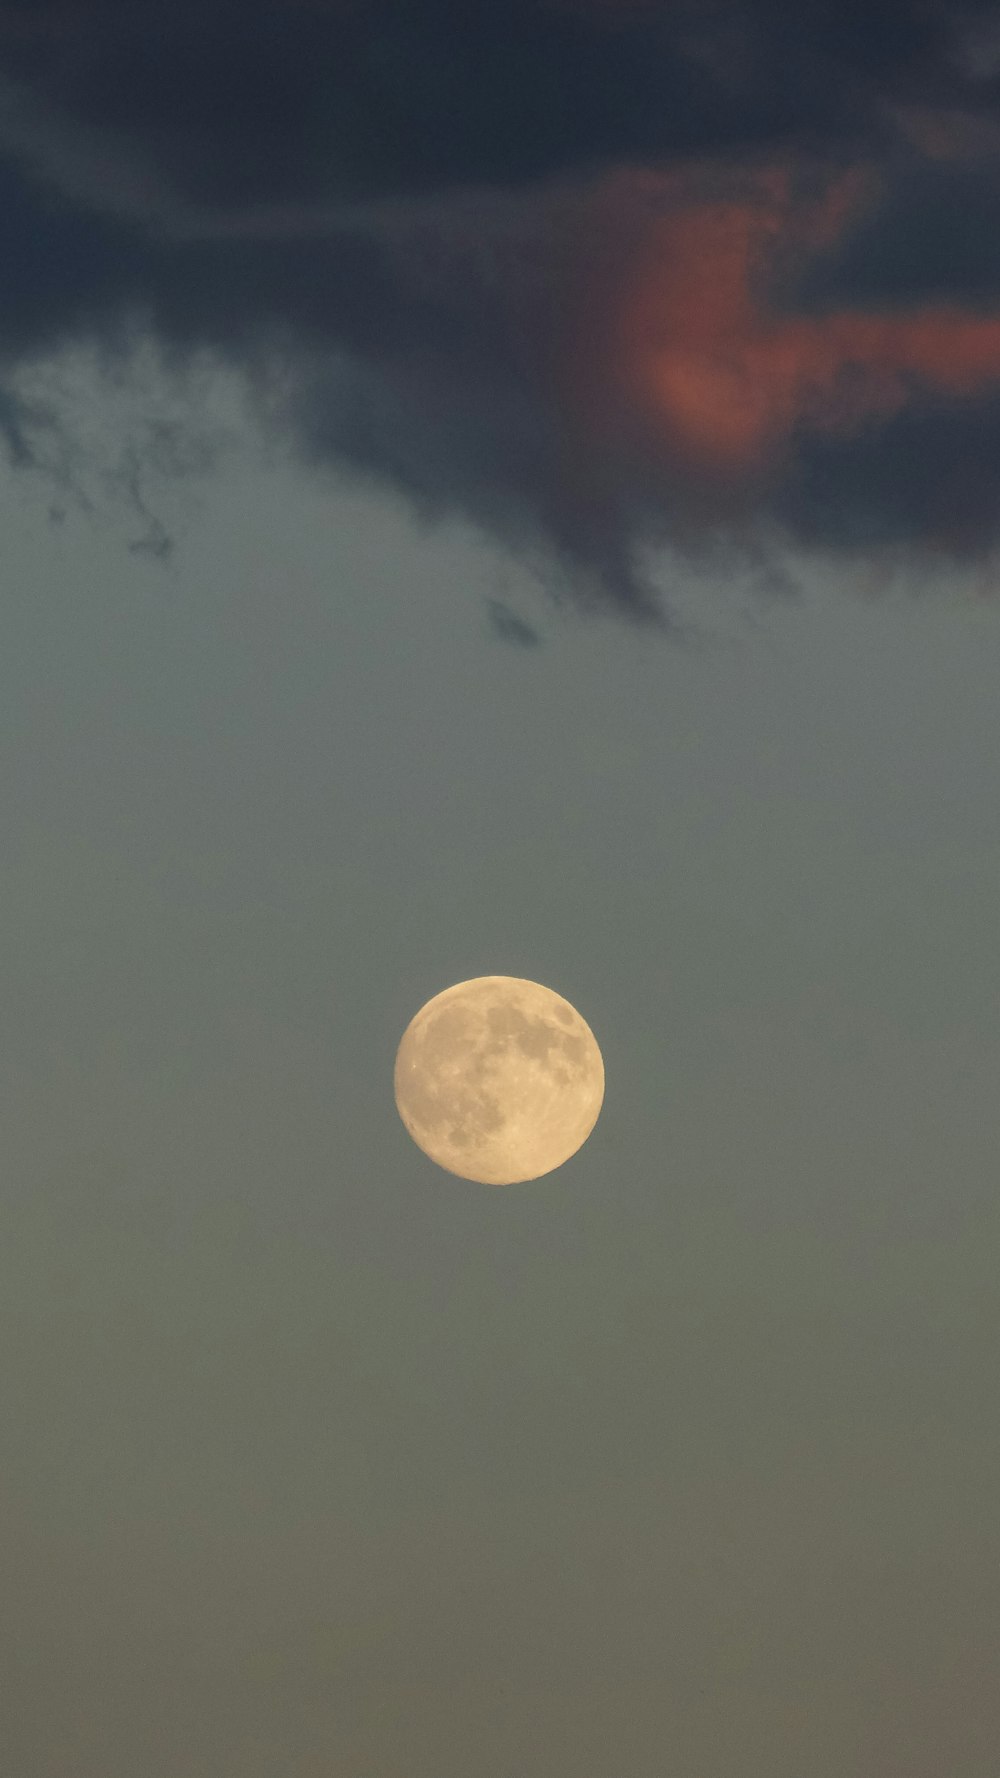 a full moon is seen in the sky